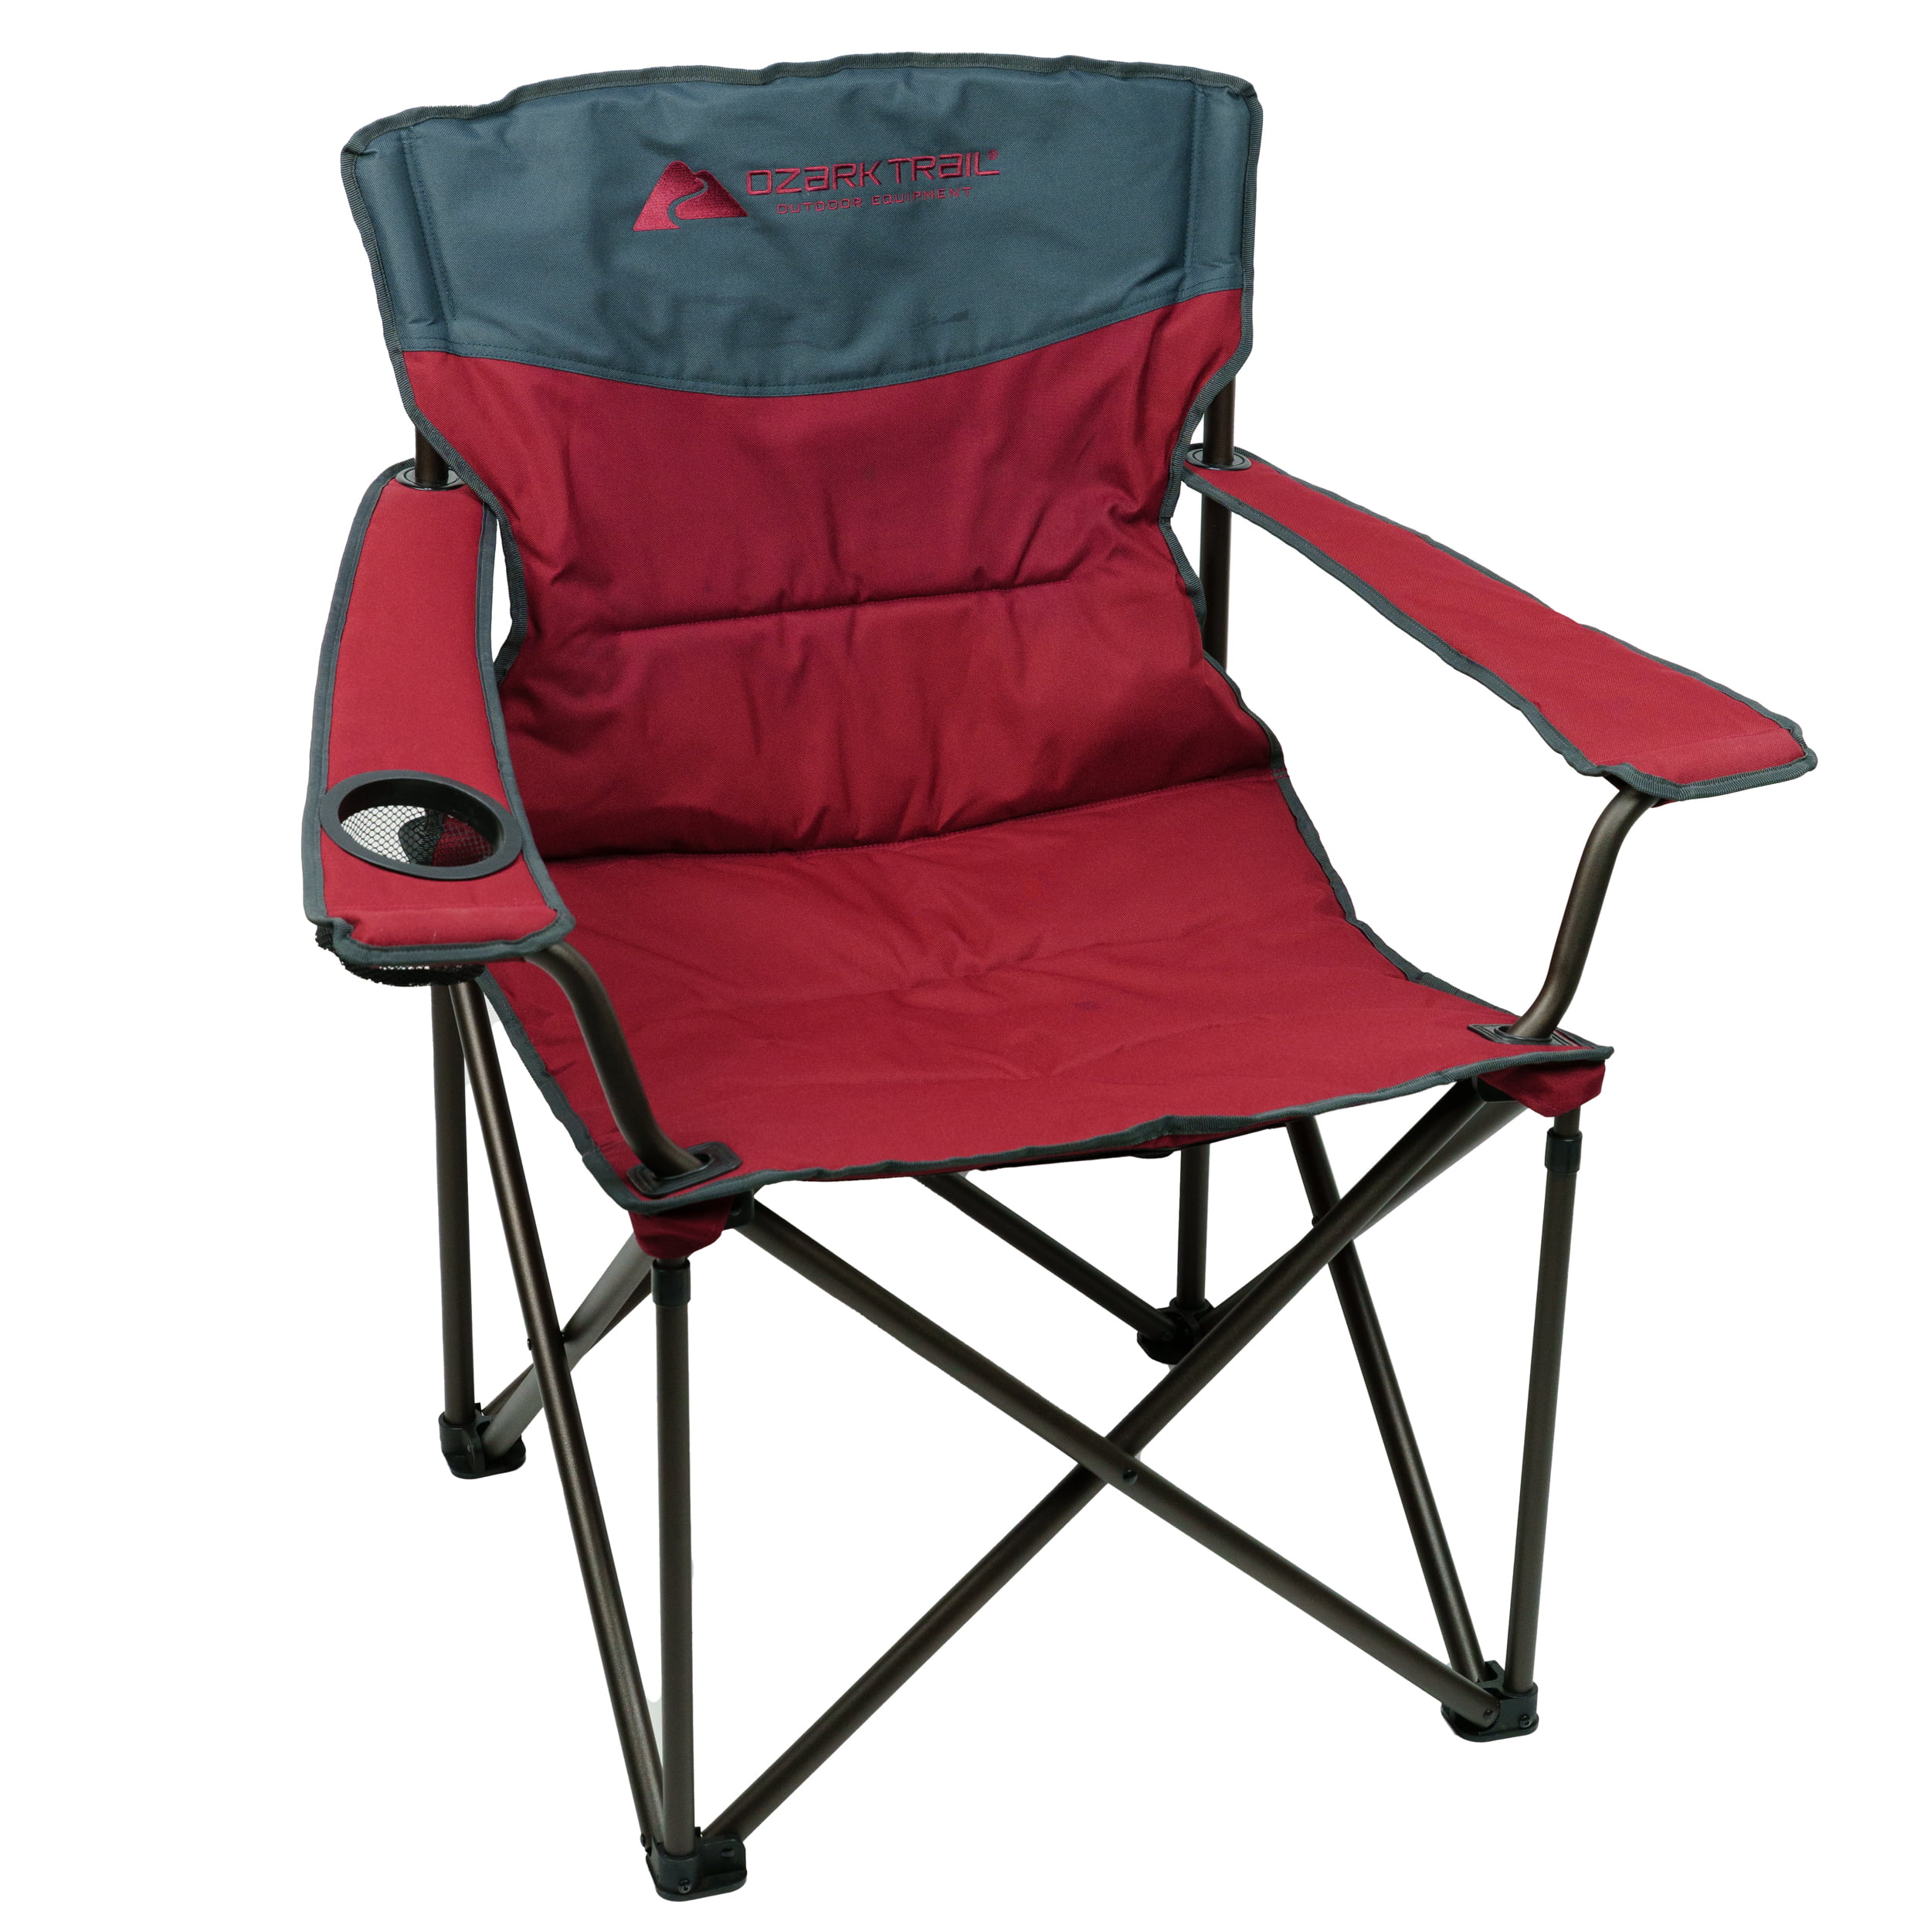 Ozark Trail Hazel Creek Lightweight Quad Chair with Cup Holder, Red